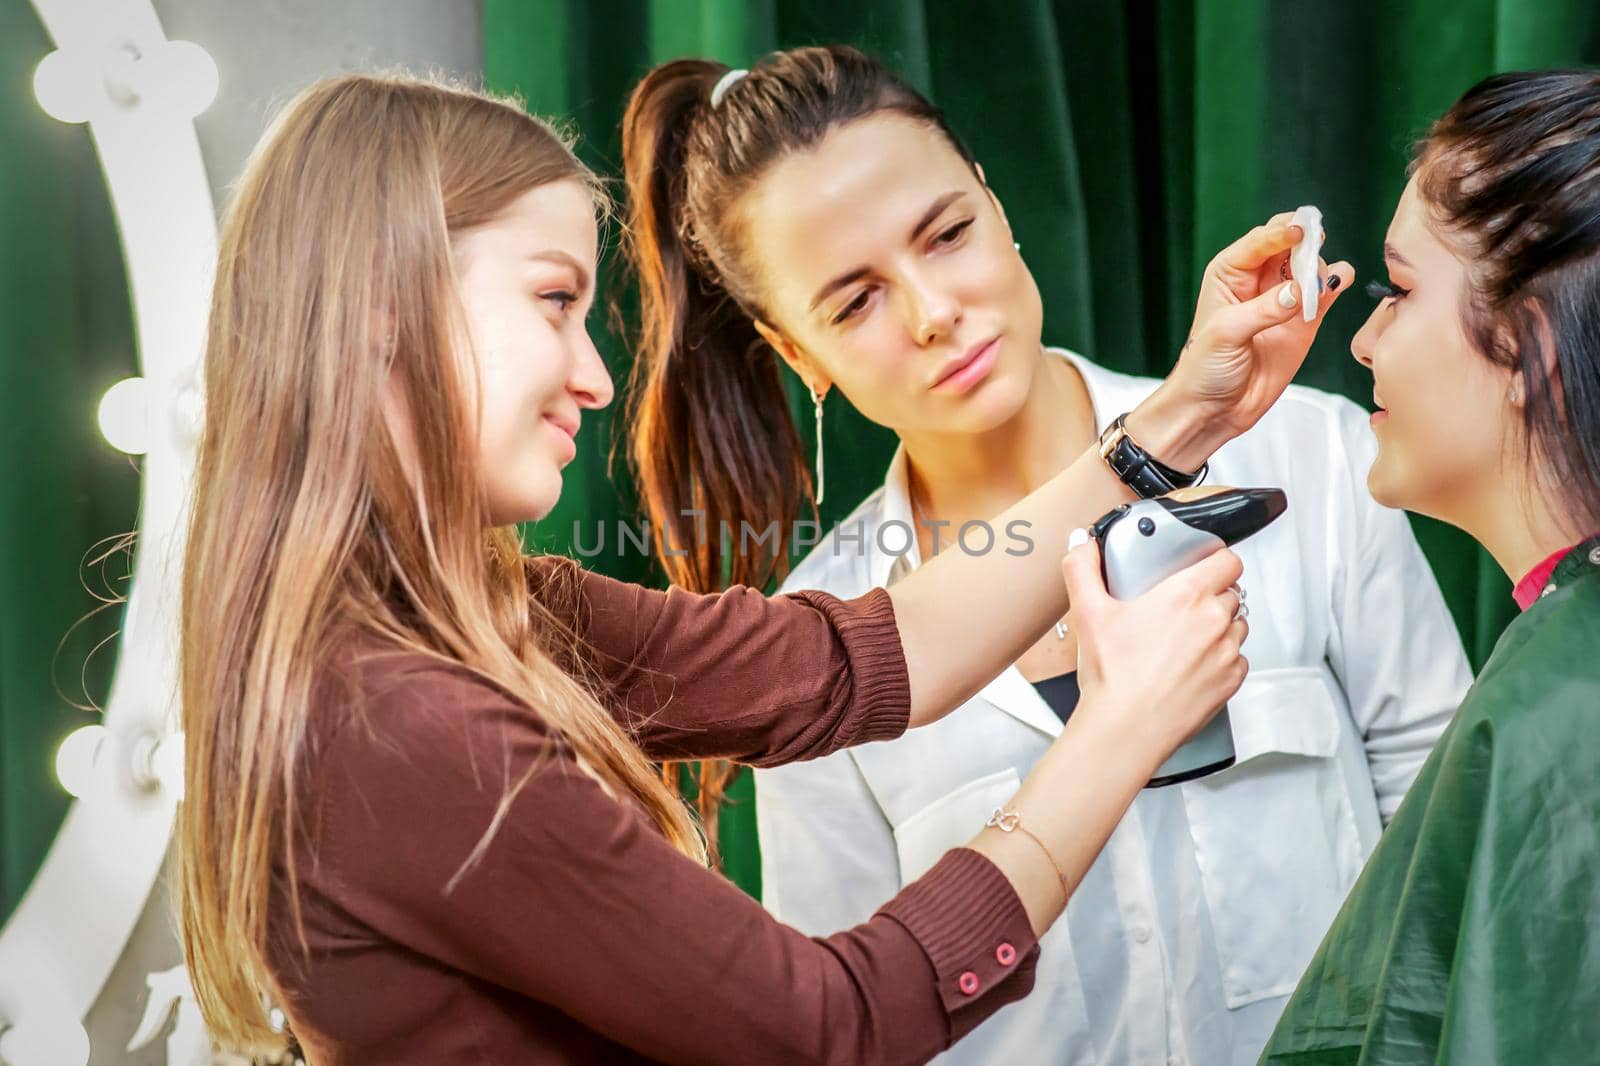 Makeup artist making professional makeup on the face of a young woman using an airbrush. by okskukuruza